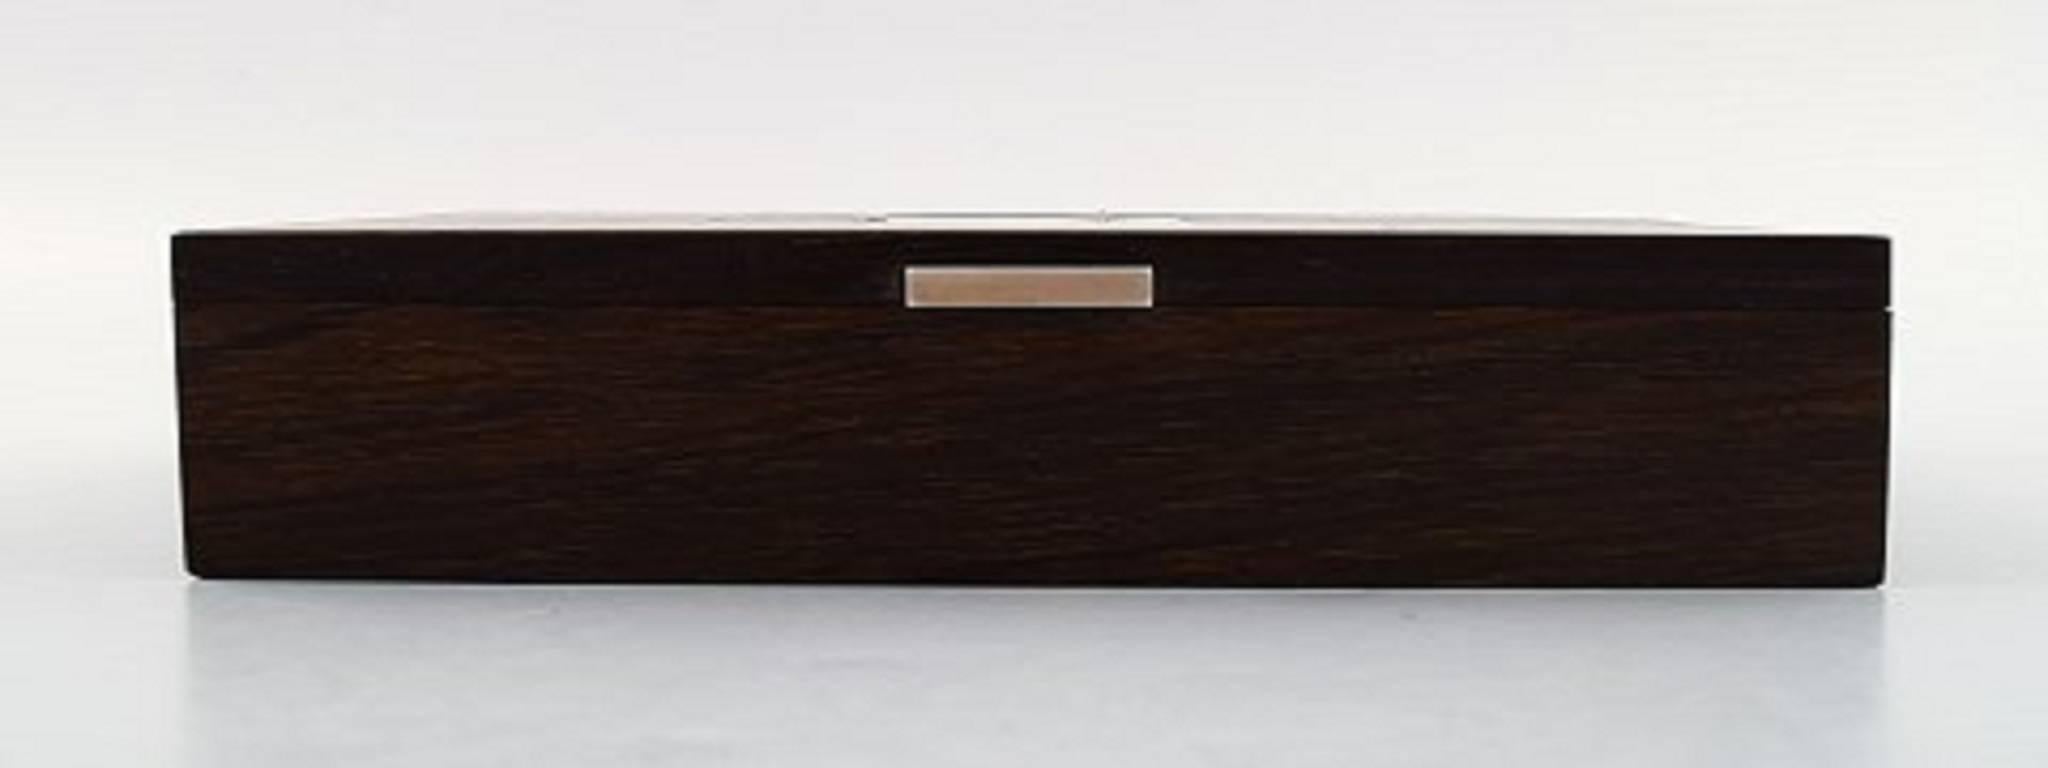 Scandinavian Modern Hans Hansen, Casket / Box in Rosewood Inlaid with Silver